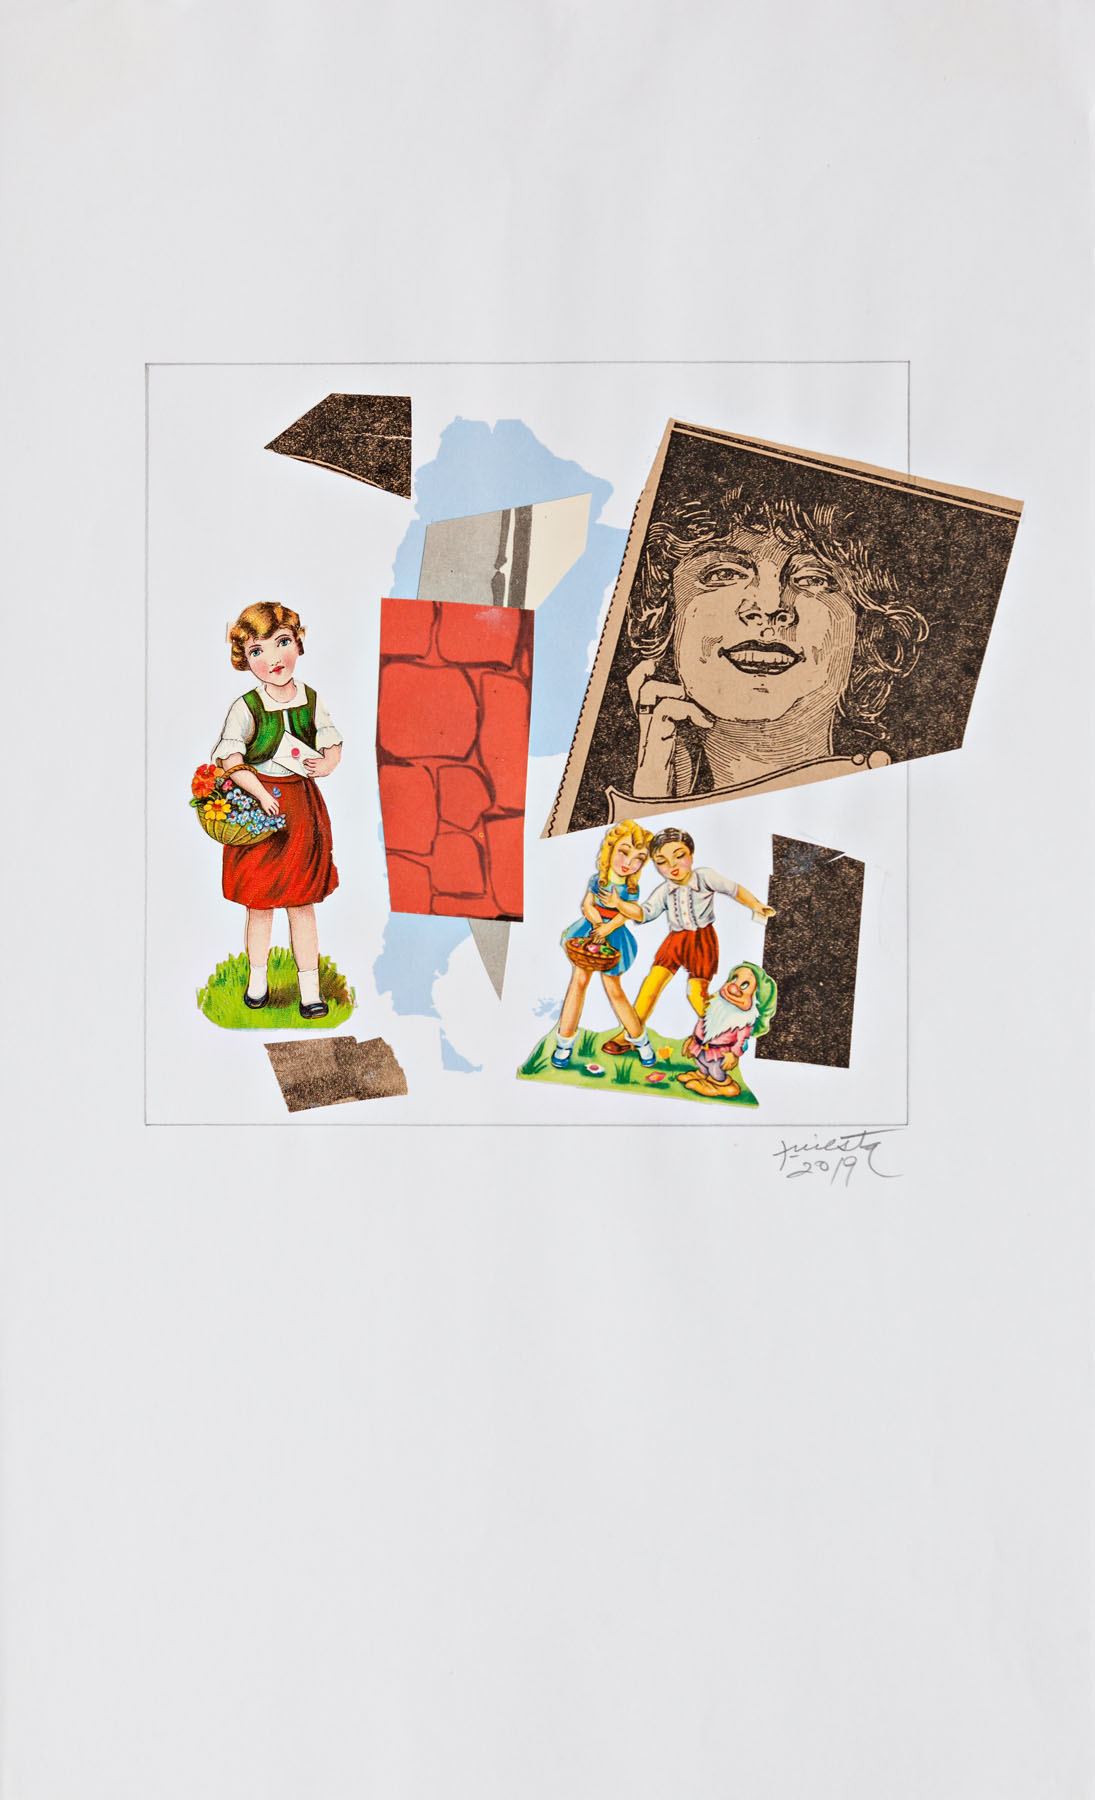 Serie verano, papel collage, 35,5 cm x 21,5 cm, 2020